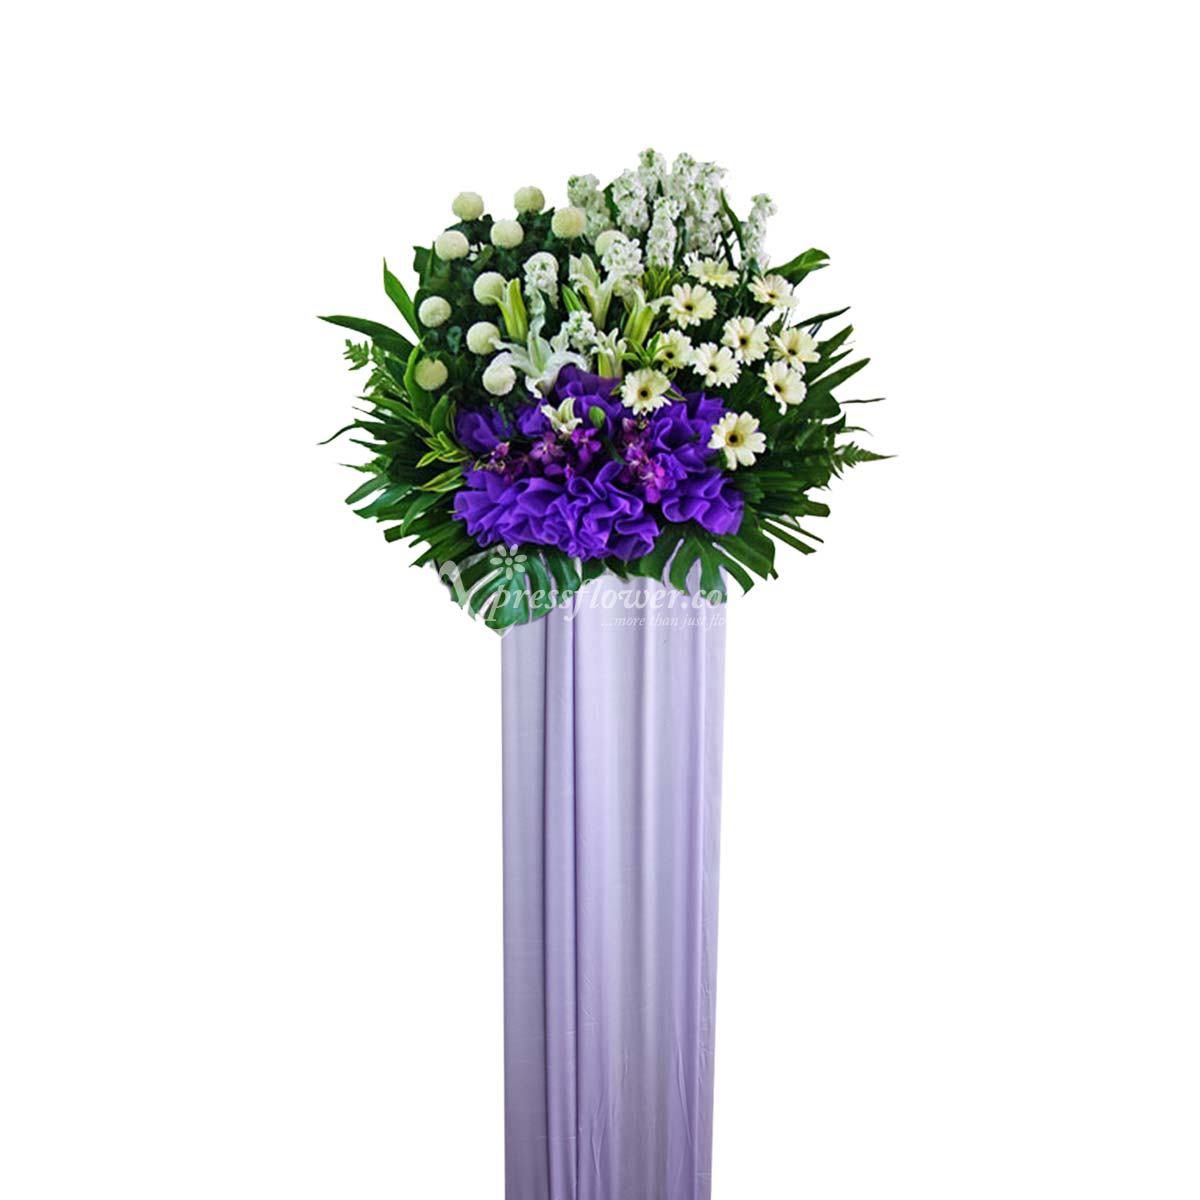 SC1404 Charming Consolation Matthiola Lilies Gerbera Wreath Funeral & Condolence Flower Stands